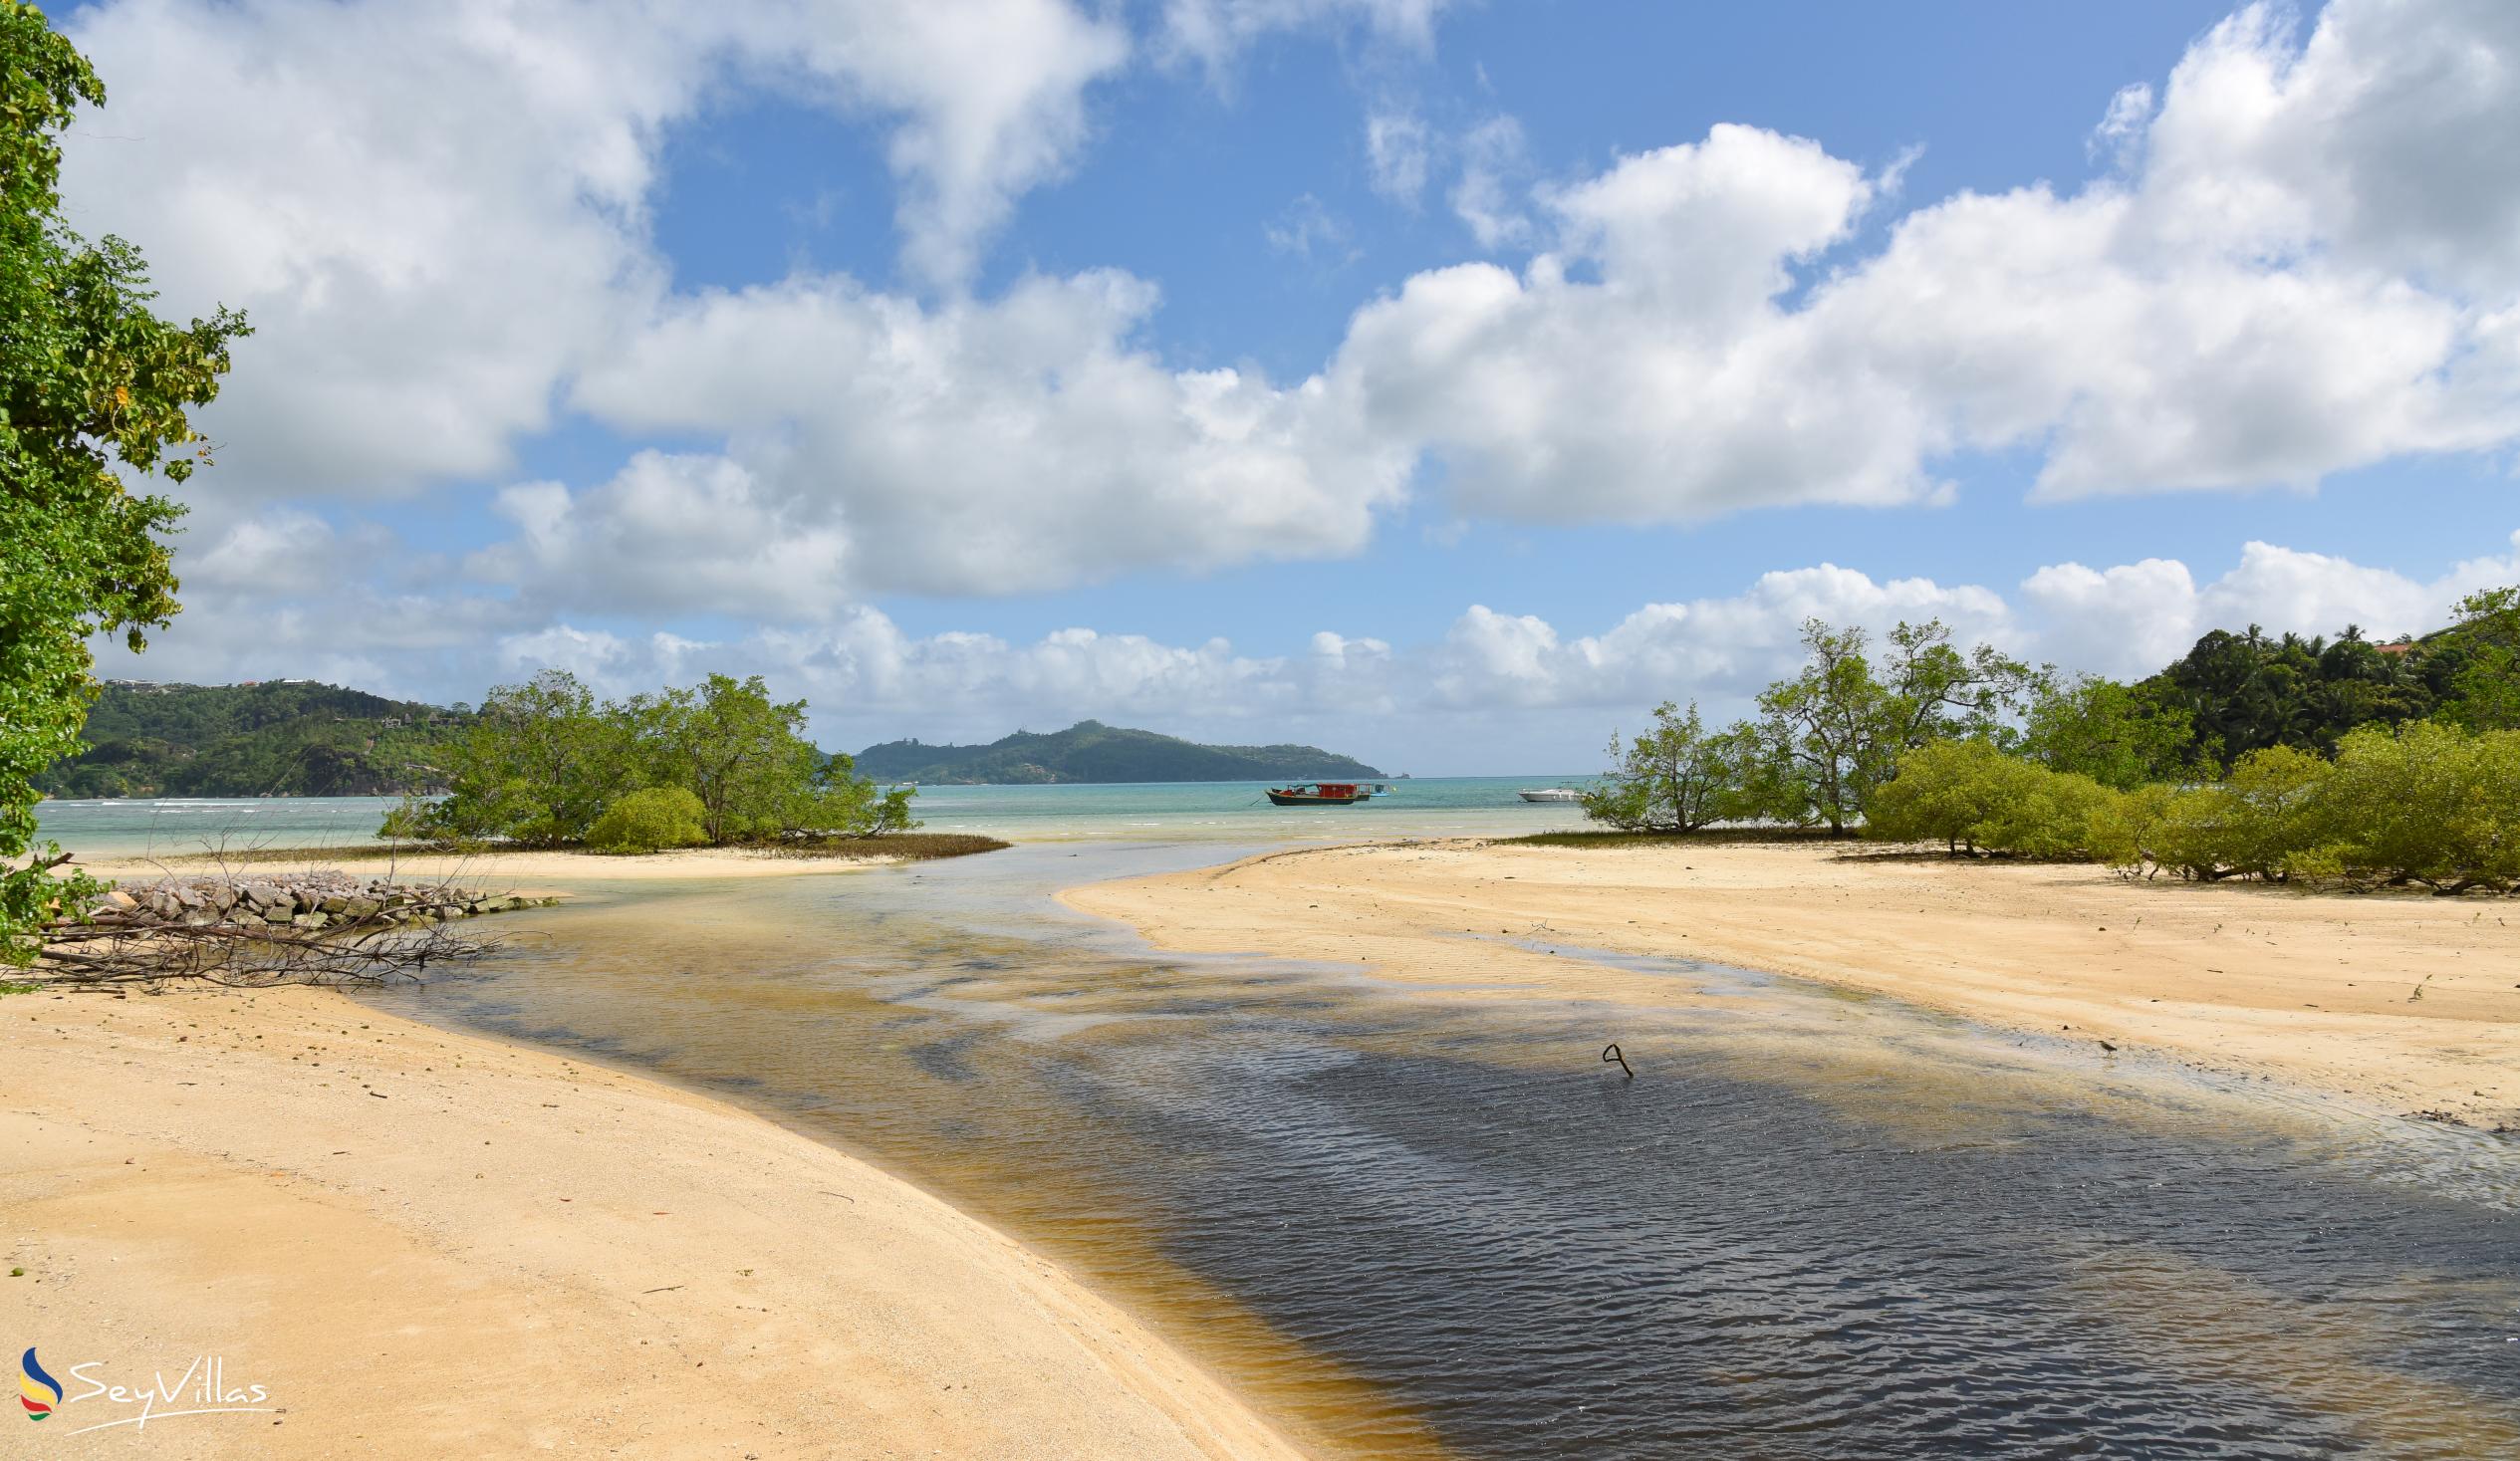 Photo 2: Anse Boileau - Mahé (Seychelles)